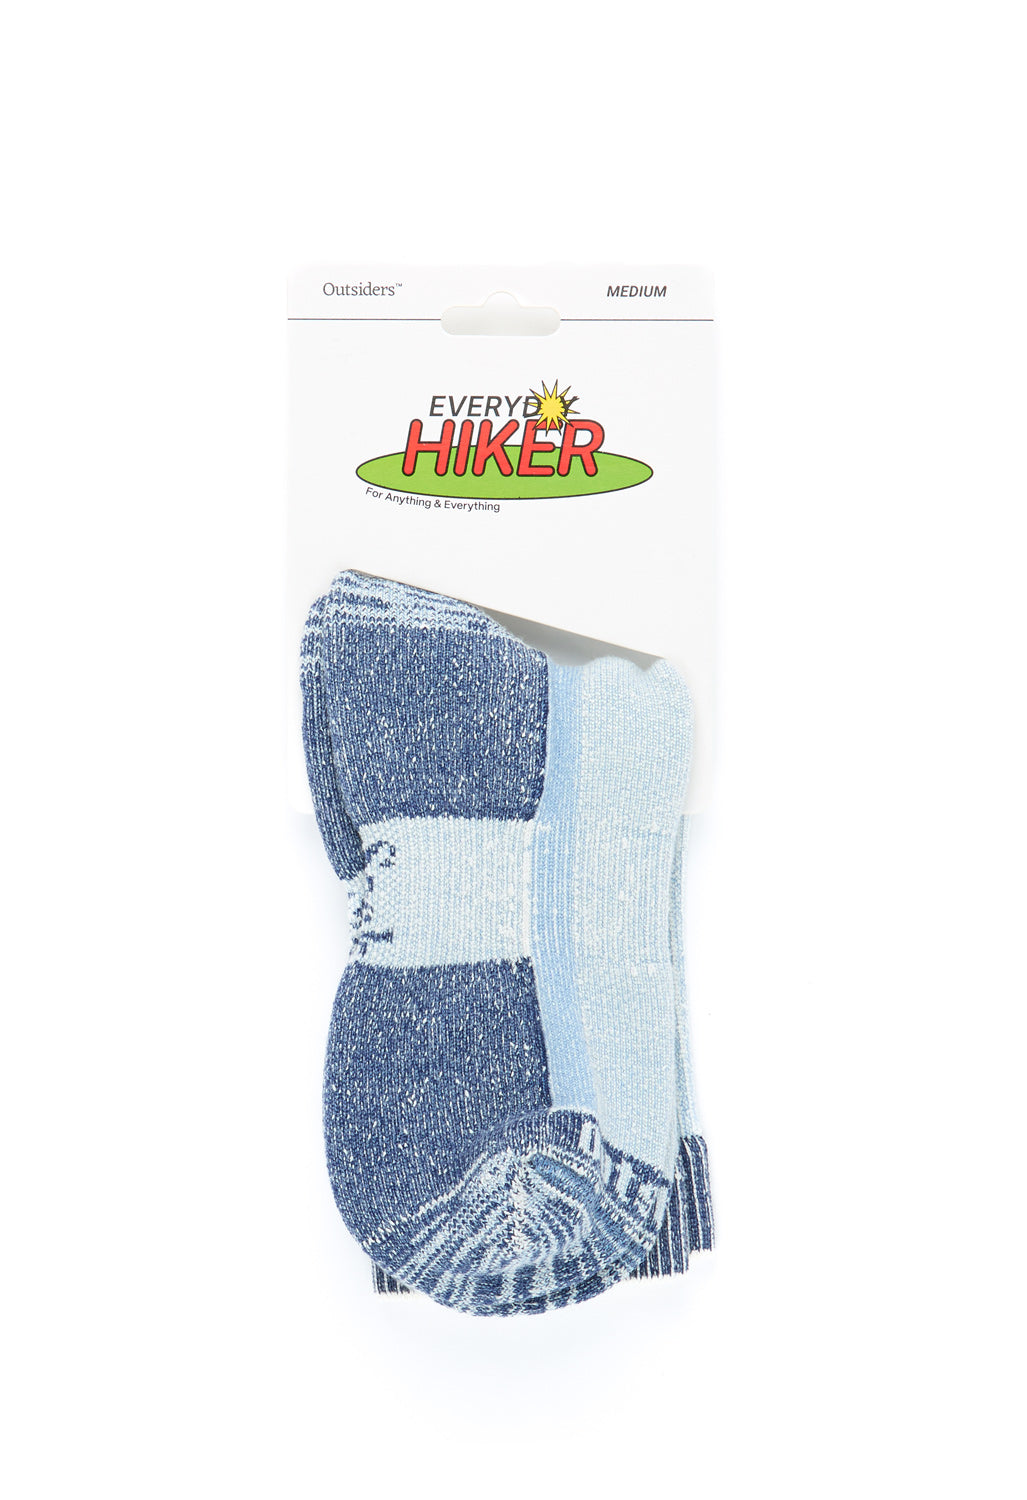 Outsiders Everyday Hiker Socks - Blue